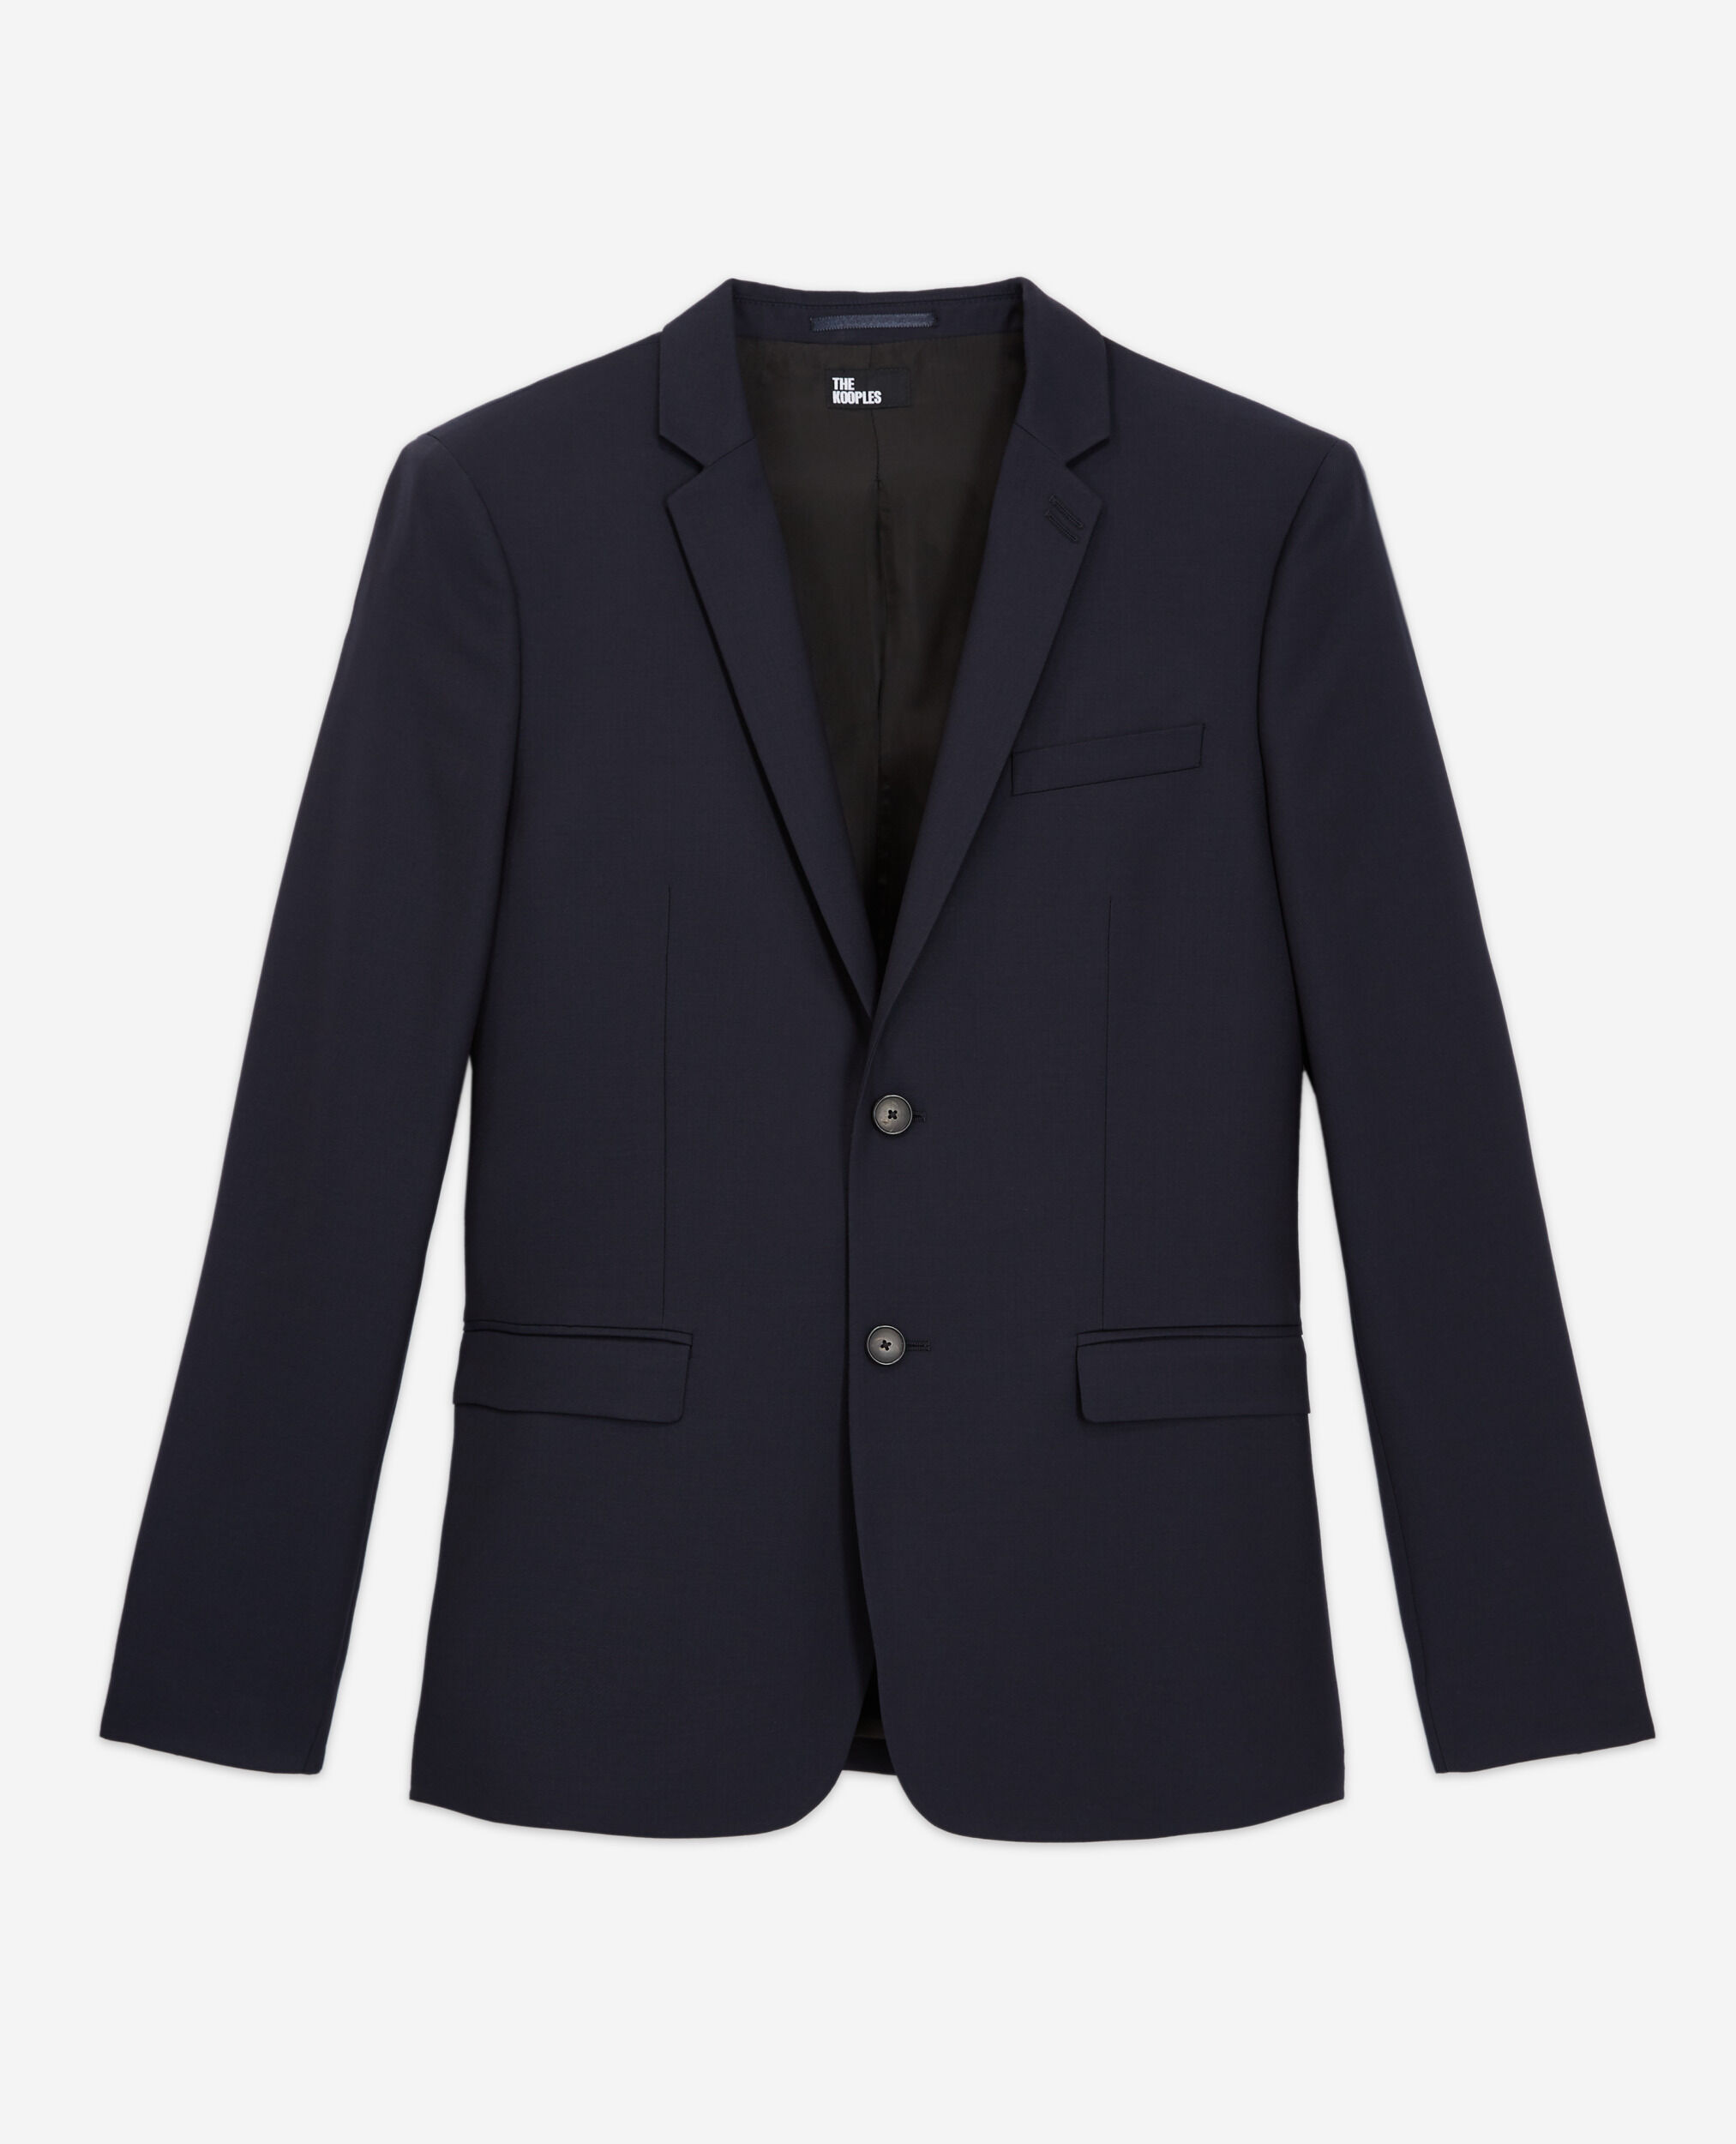 Navy blue wool suit jacket | The Kooples - Canada